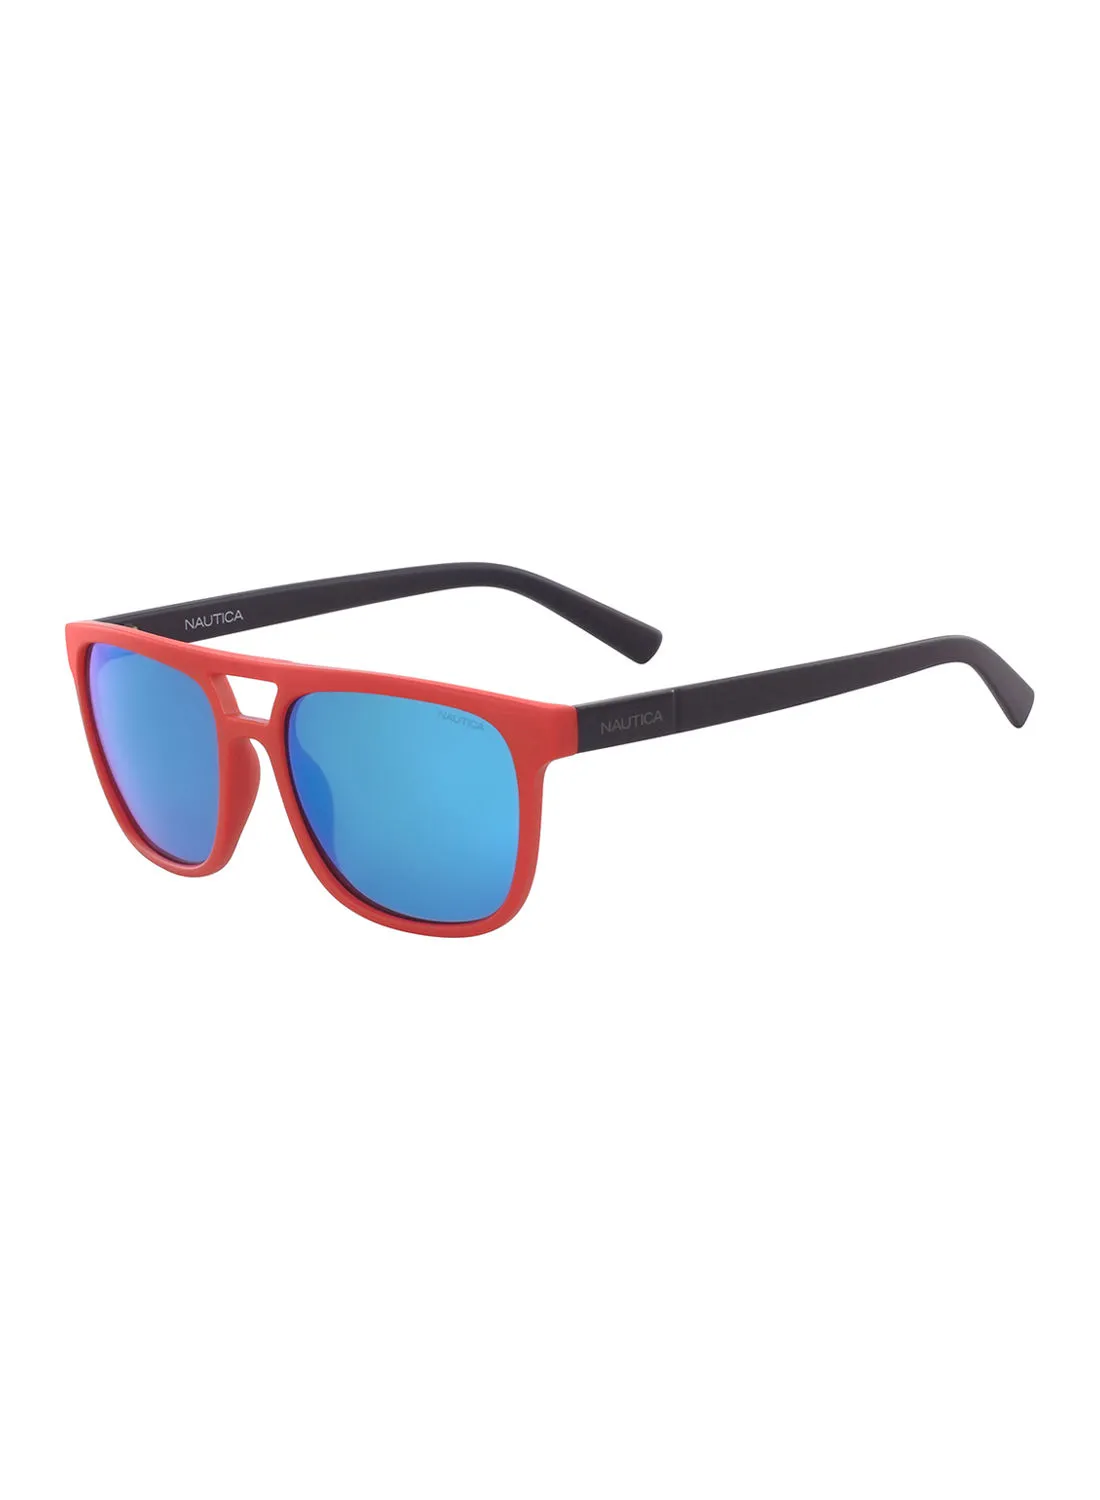 NAUTICA Men's UV Protection Rectangular Sunglasses - Lens Size: 56 mm